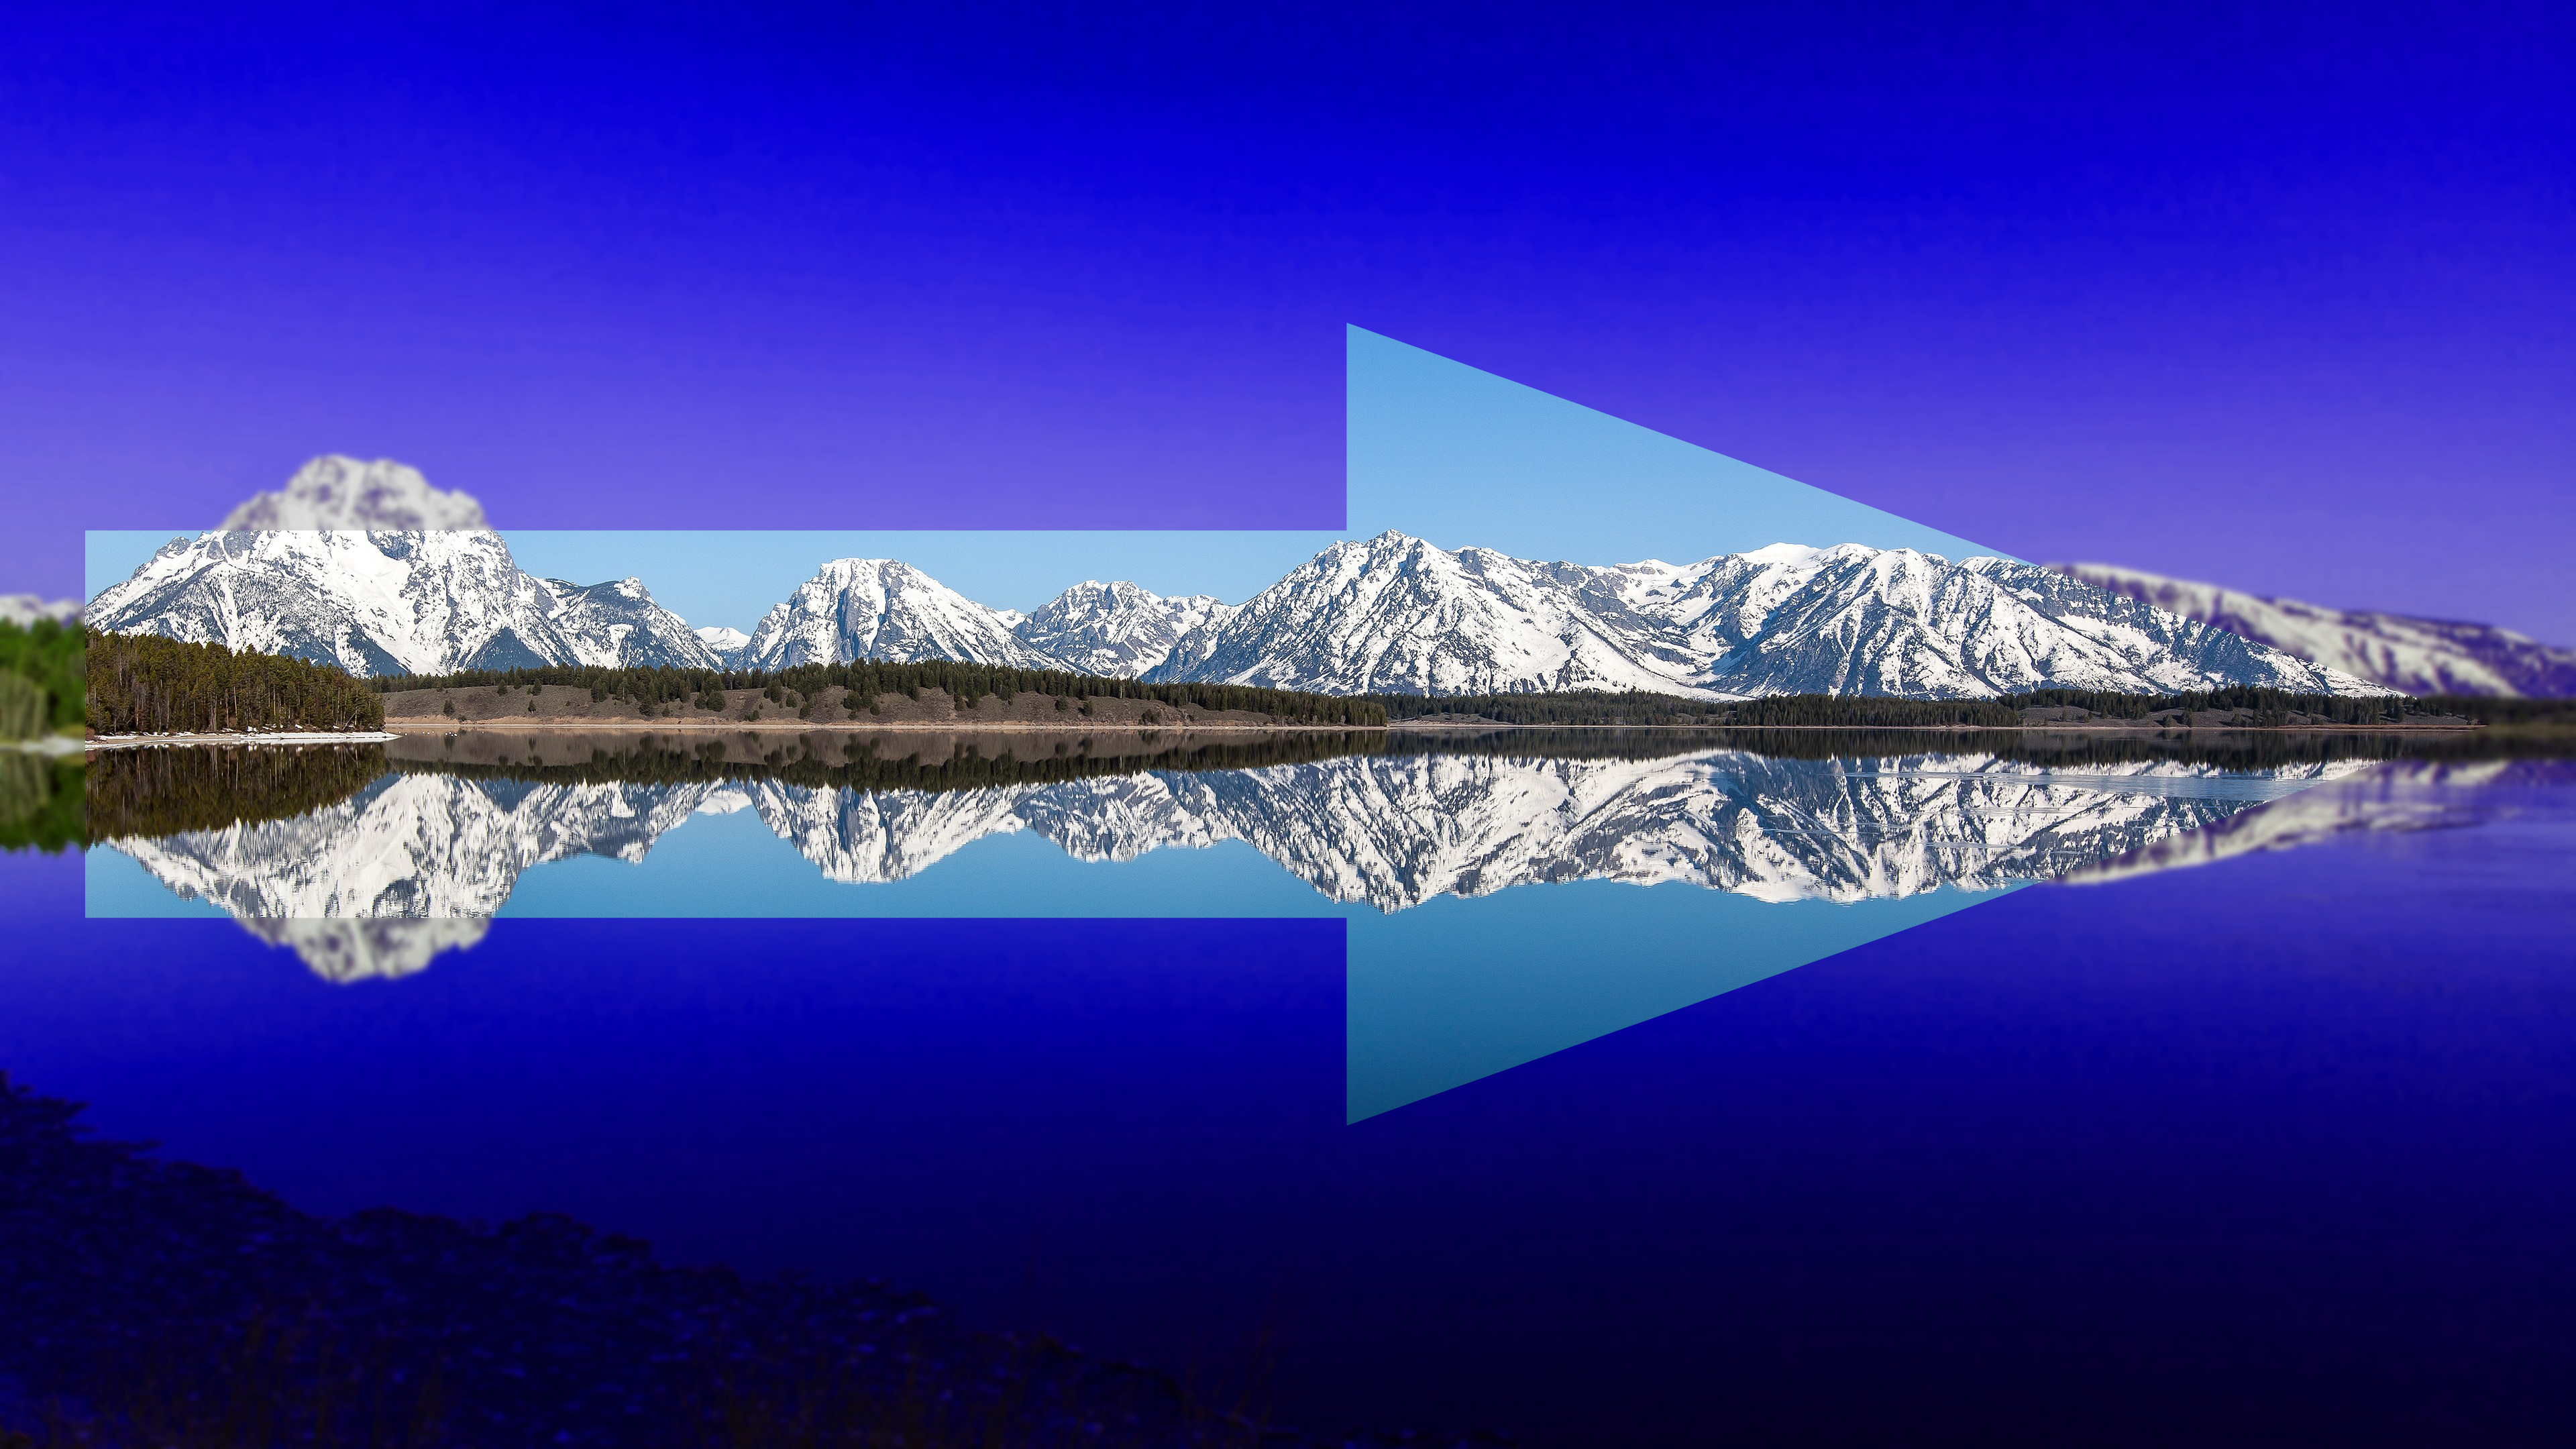 General 3840x2160 mountains arrow (design) blue landscape digital art reflection snowy peak